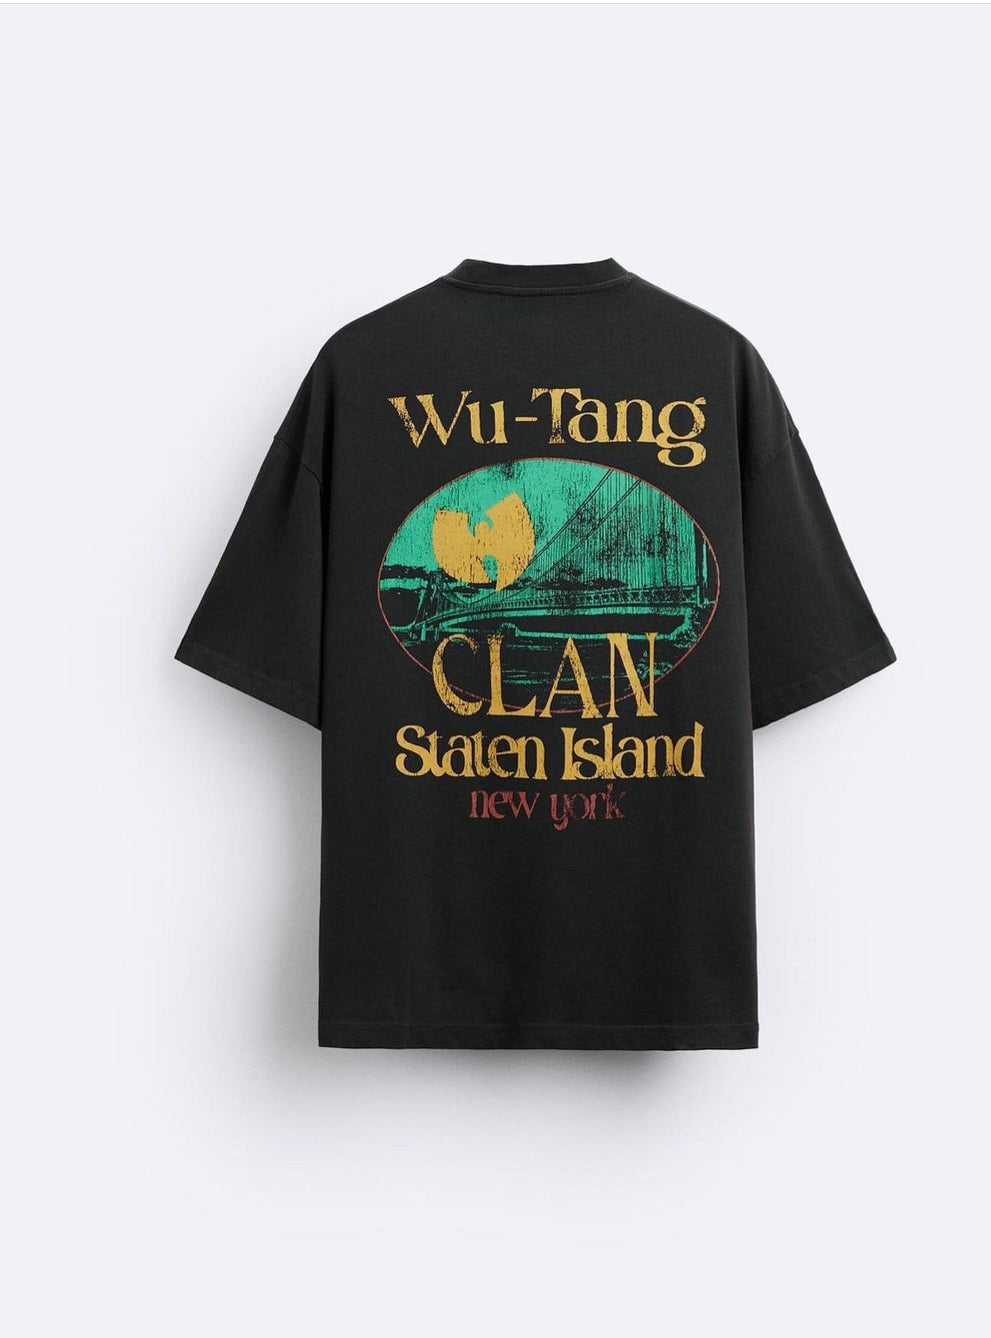 Wu tang clan tshirt